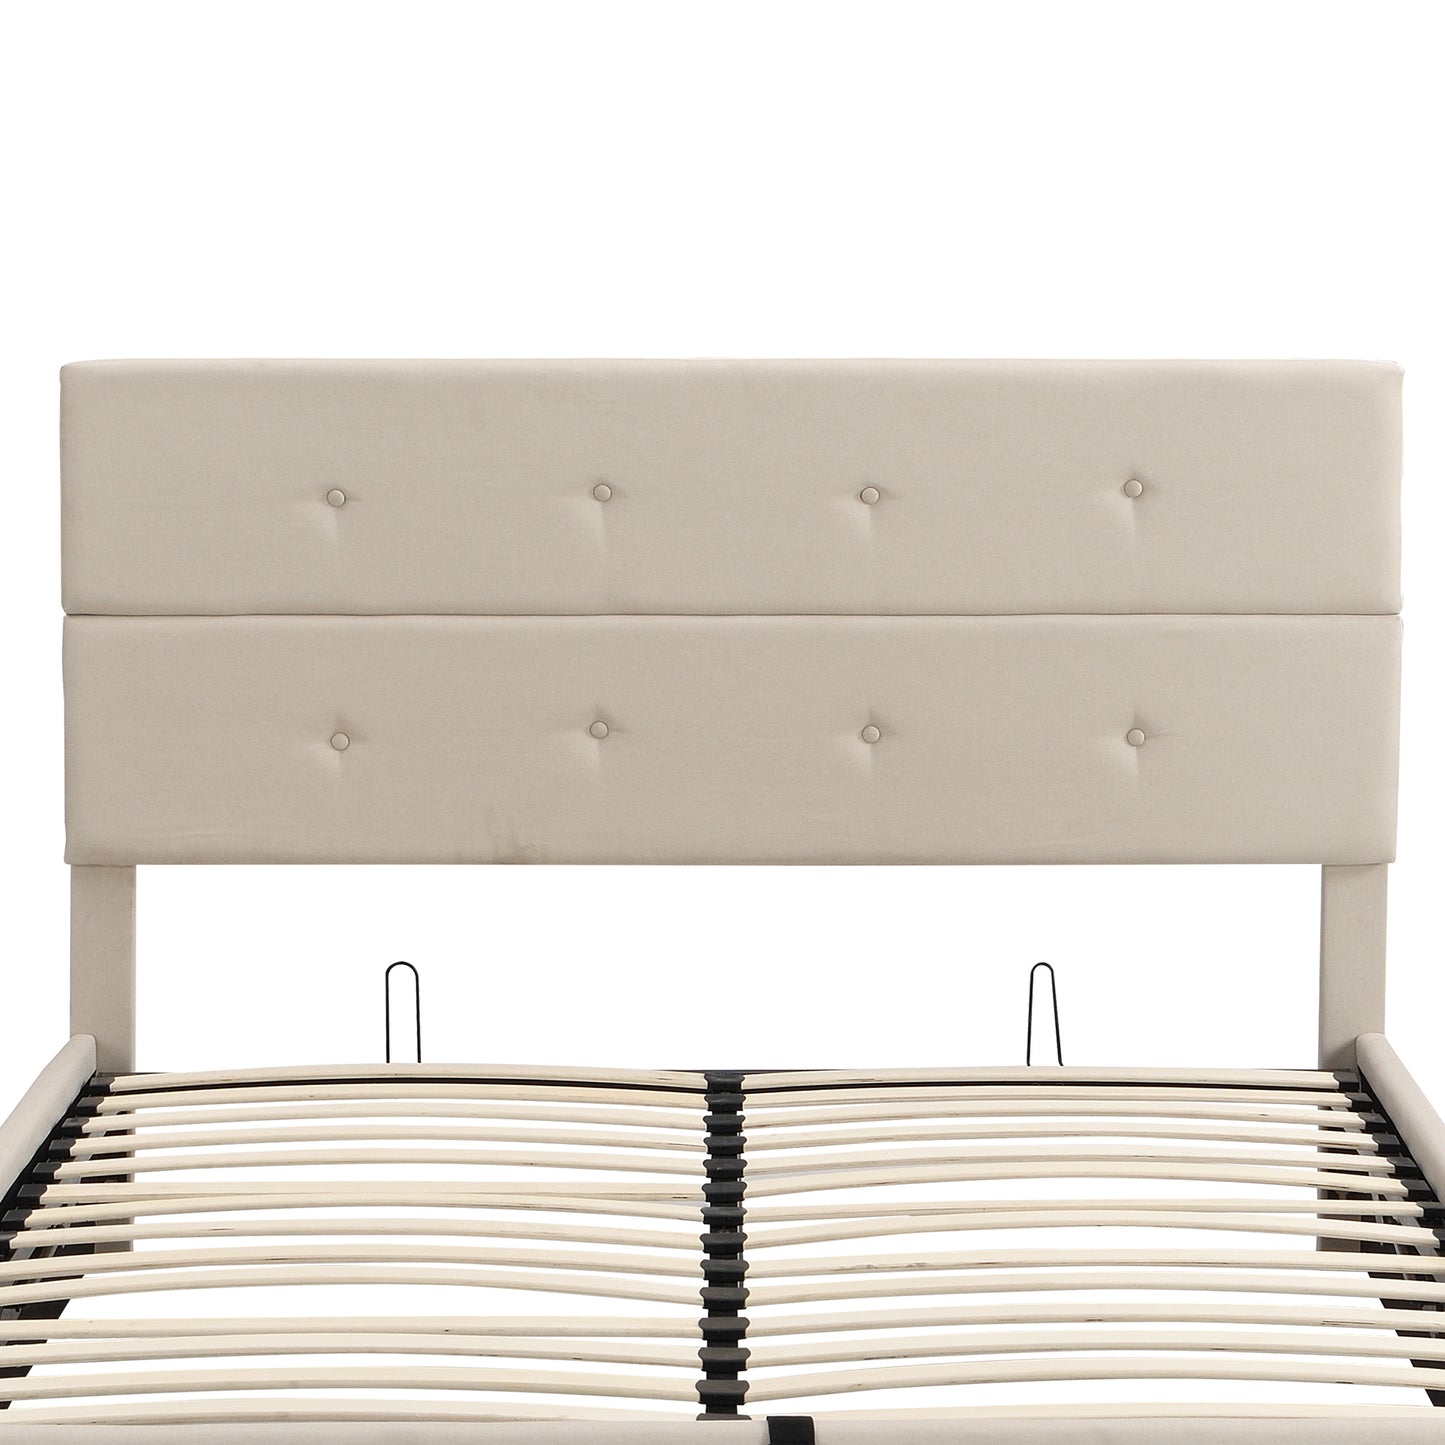 Upholstered Platform Bed with Underneath Storage,Queen Size,Beige